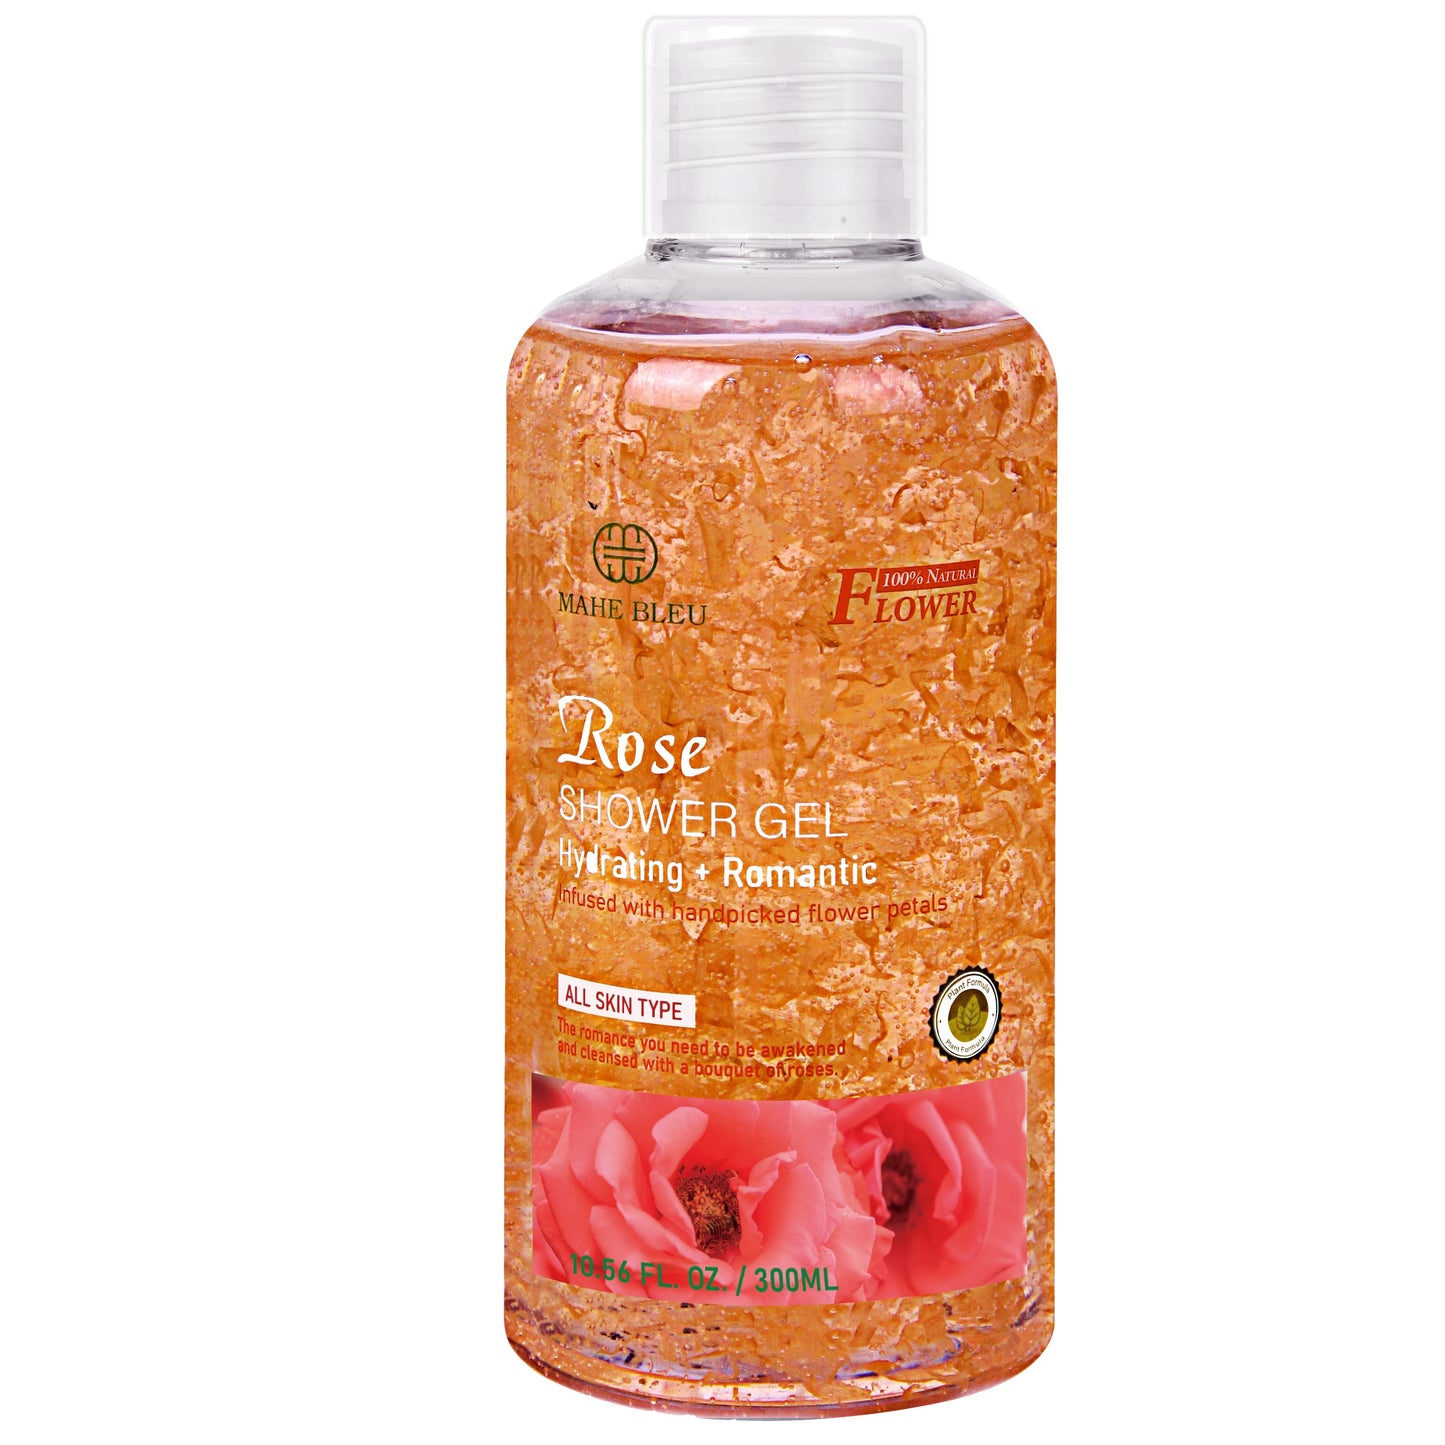 Rose Shower Gel - Hydrating & Romantic